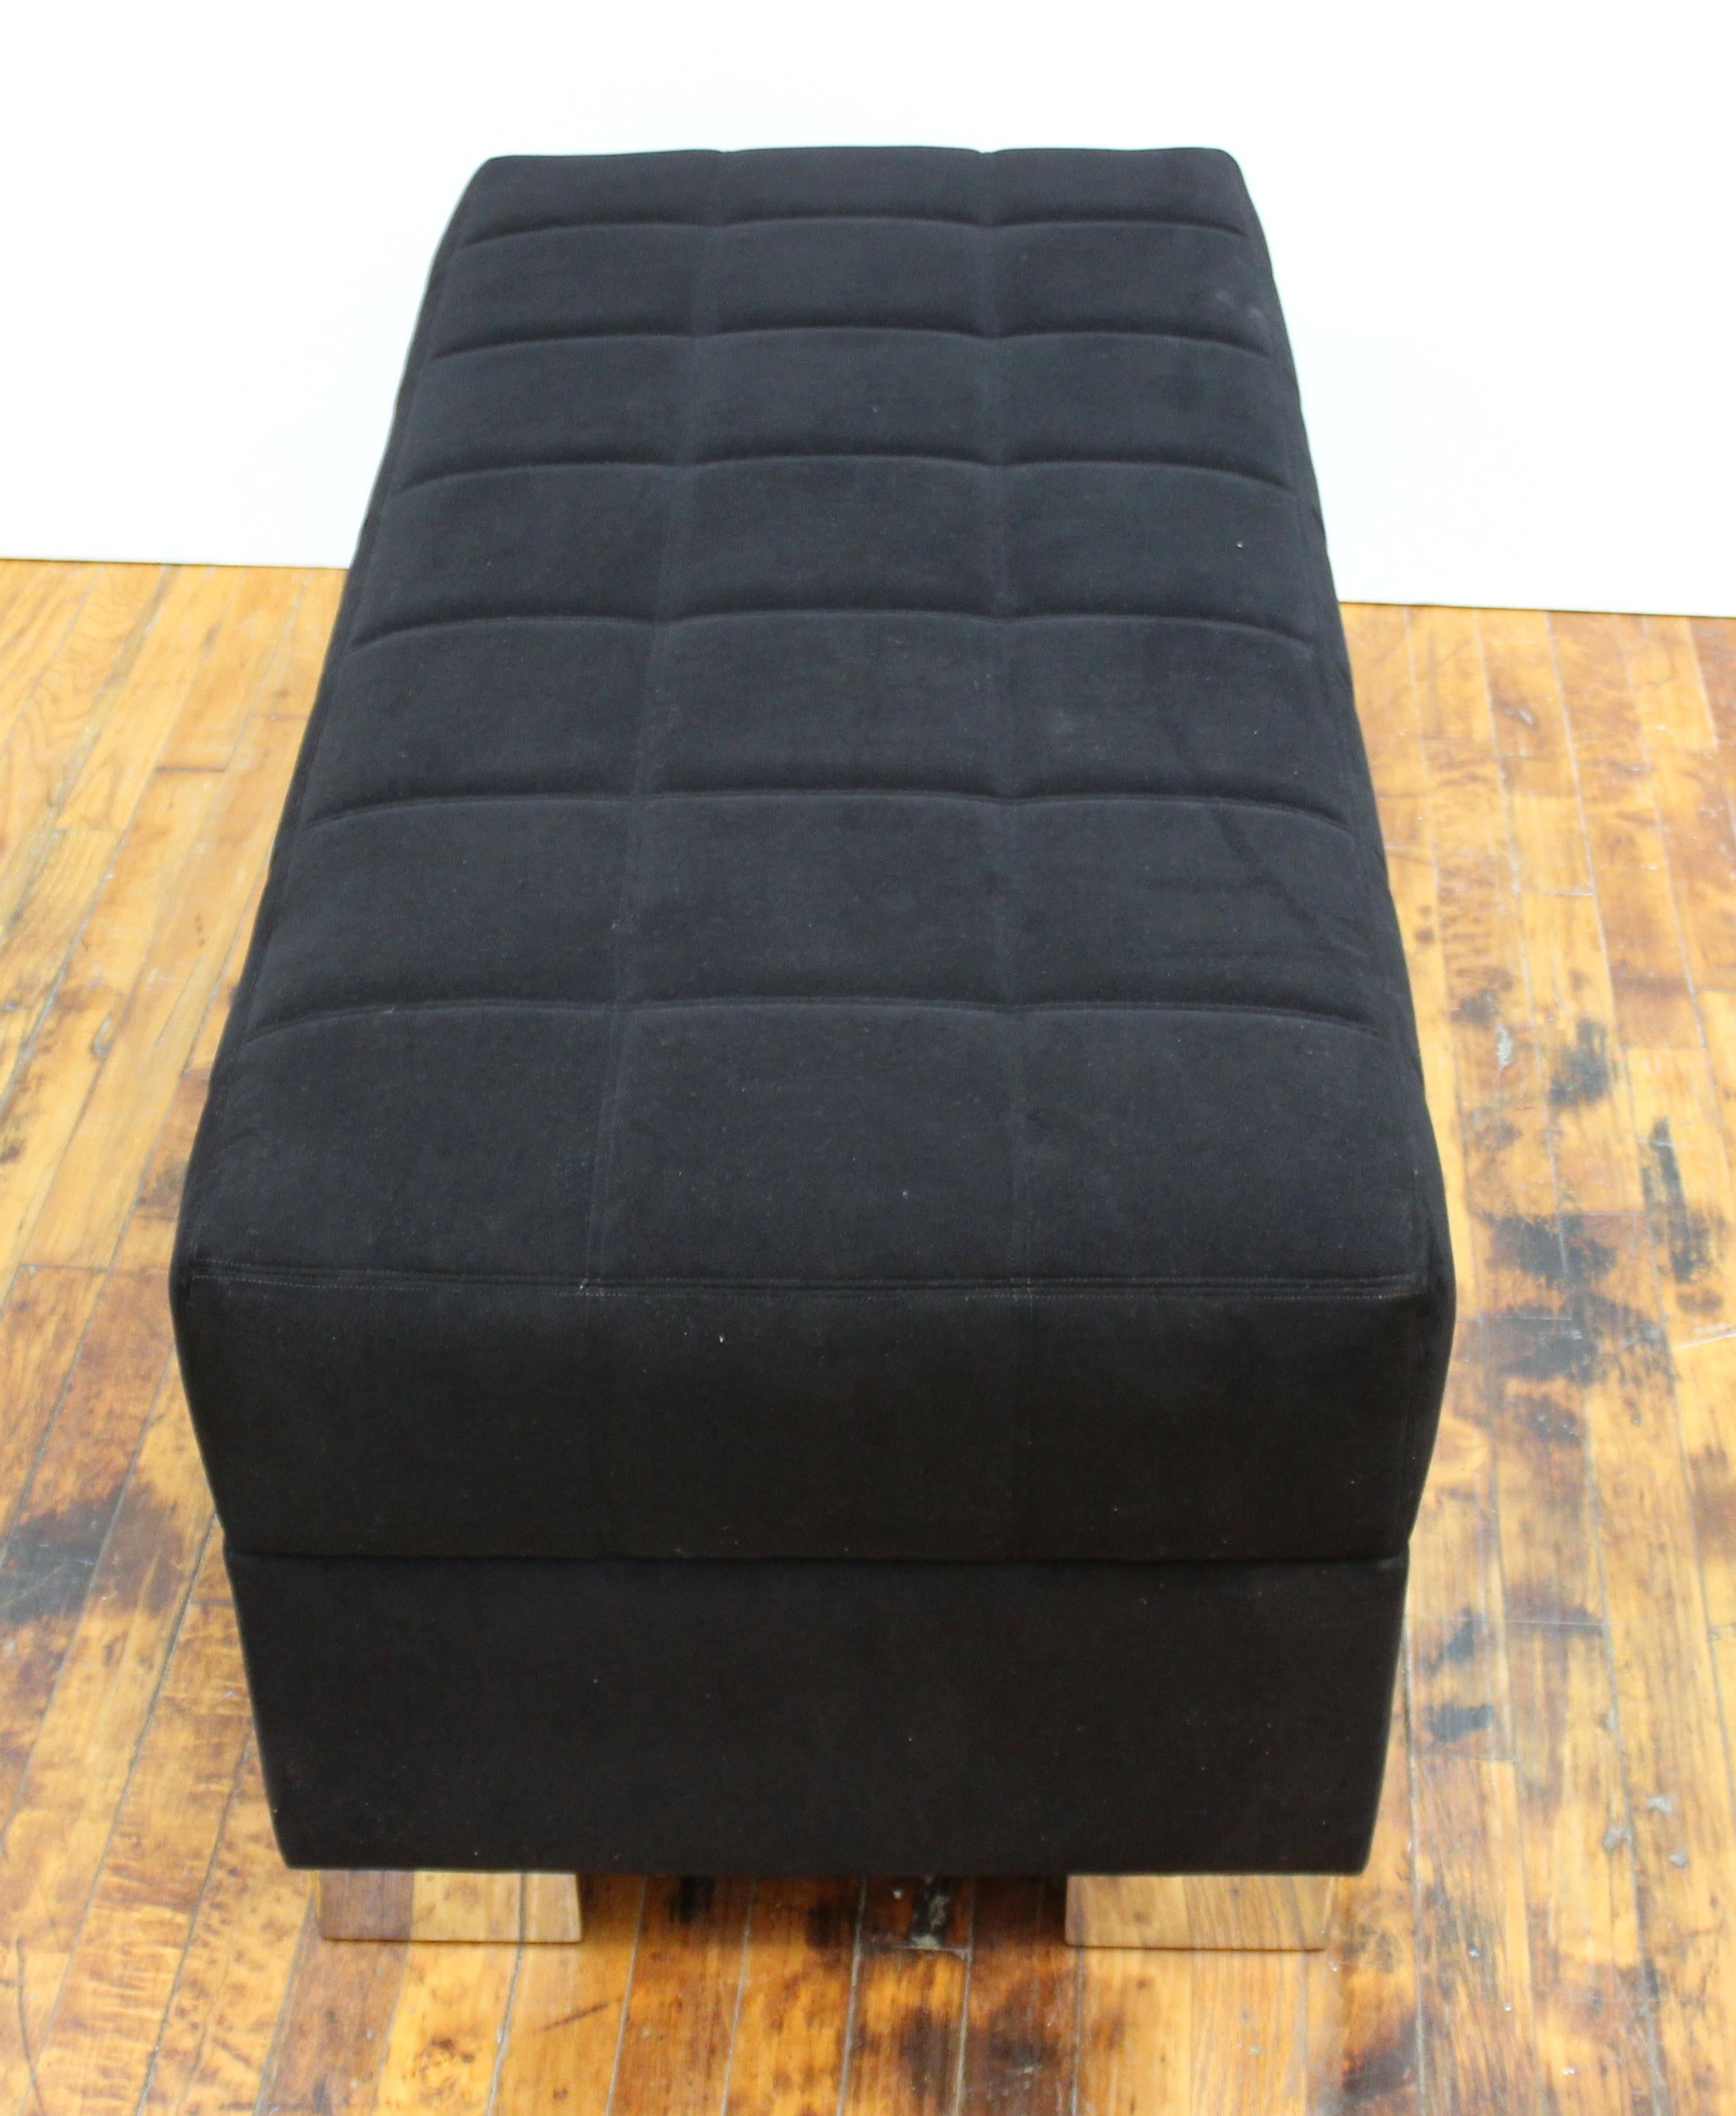 20th Century J. Robert Scott Modern Upholstered Bench or Ottoman with Chrome Legs